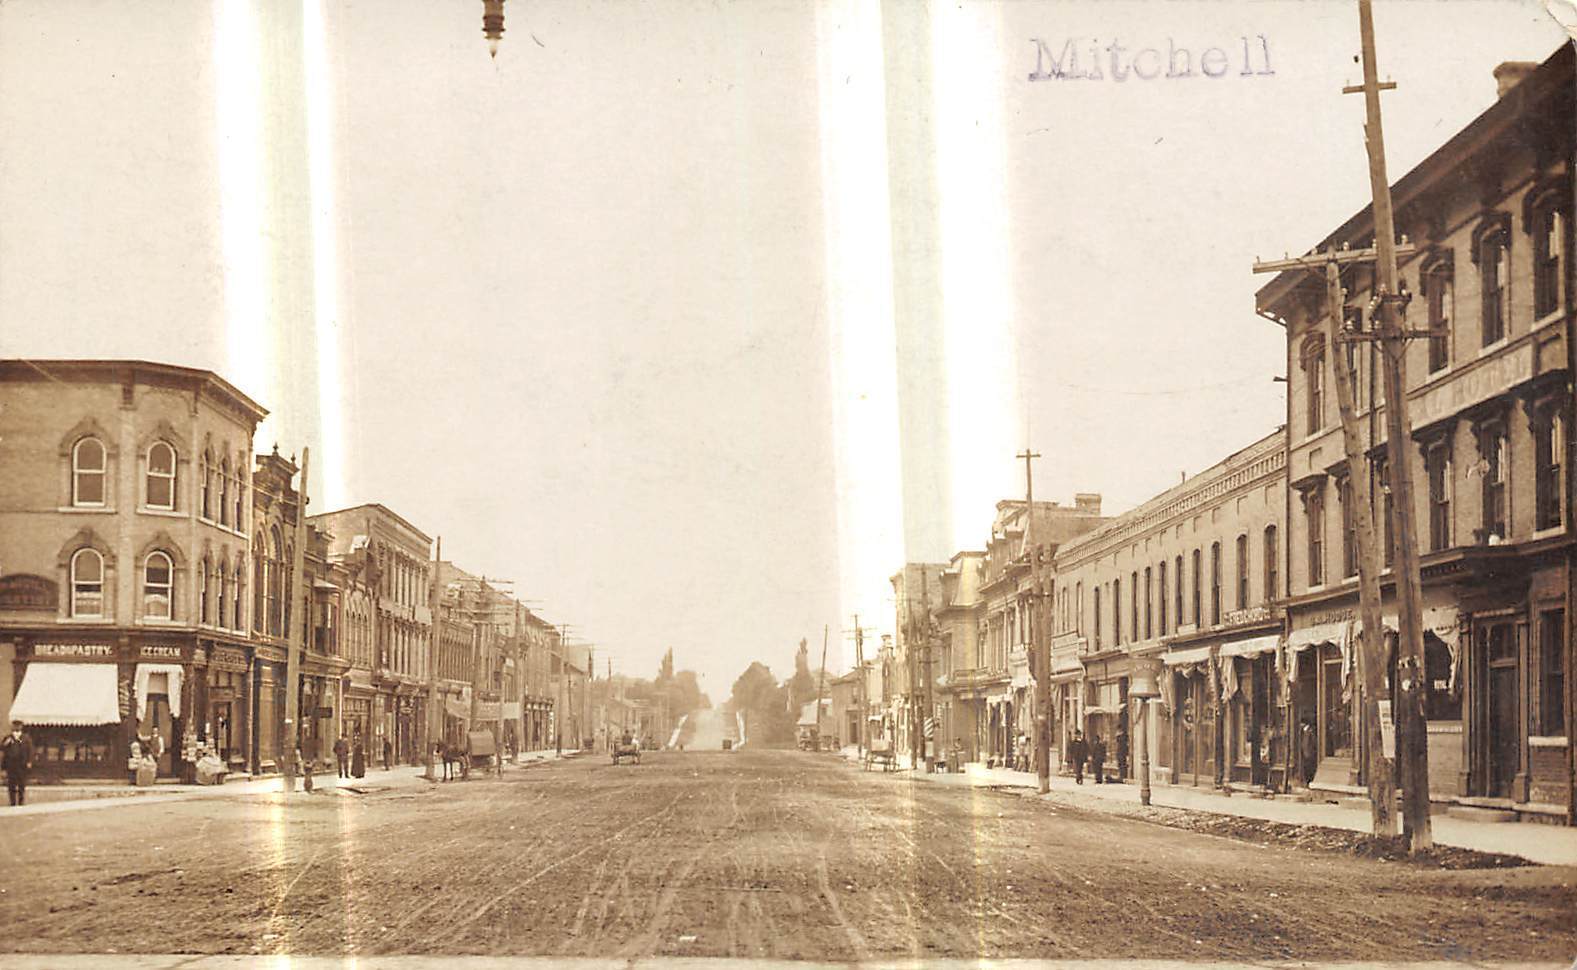 MITCHELL Ontario Canada postcard RPPC Perth County Main Street stores